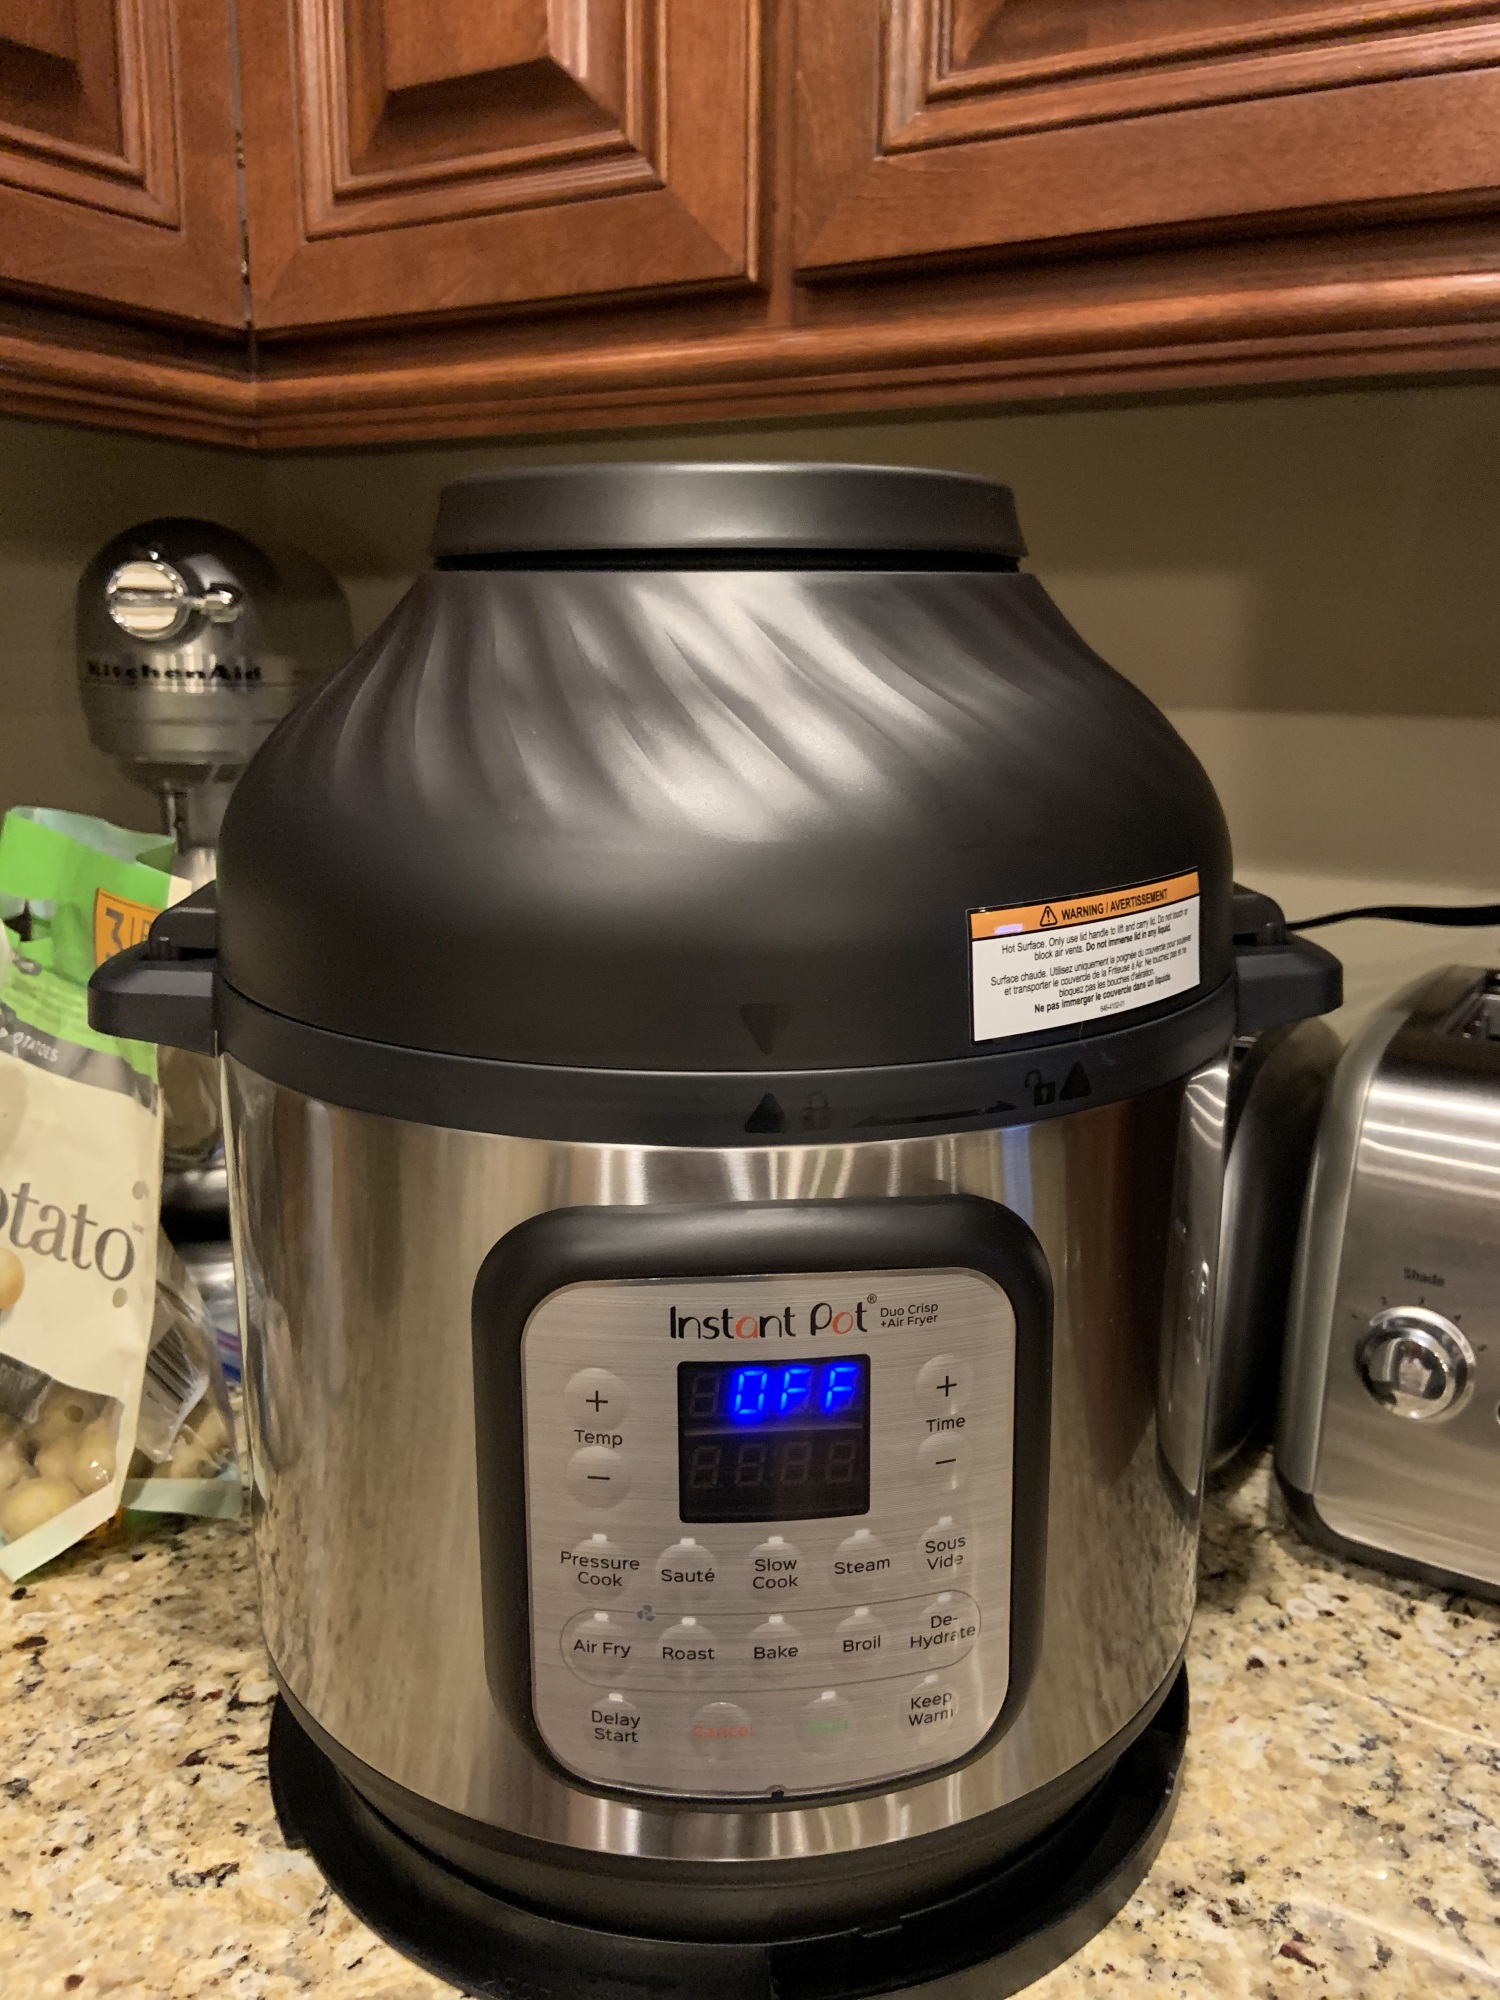 https://instantpotcooking.com/wp-content/uploads/2019/10/Instant-Pot-pressure-cooker-air-fryer-on-counter-size.jpg